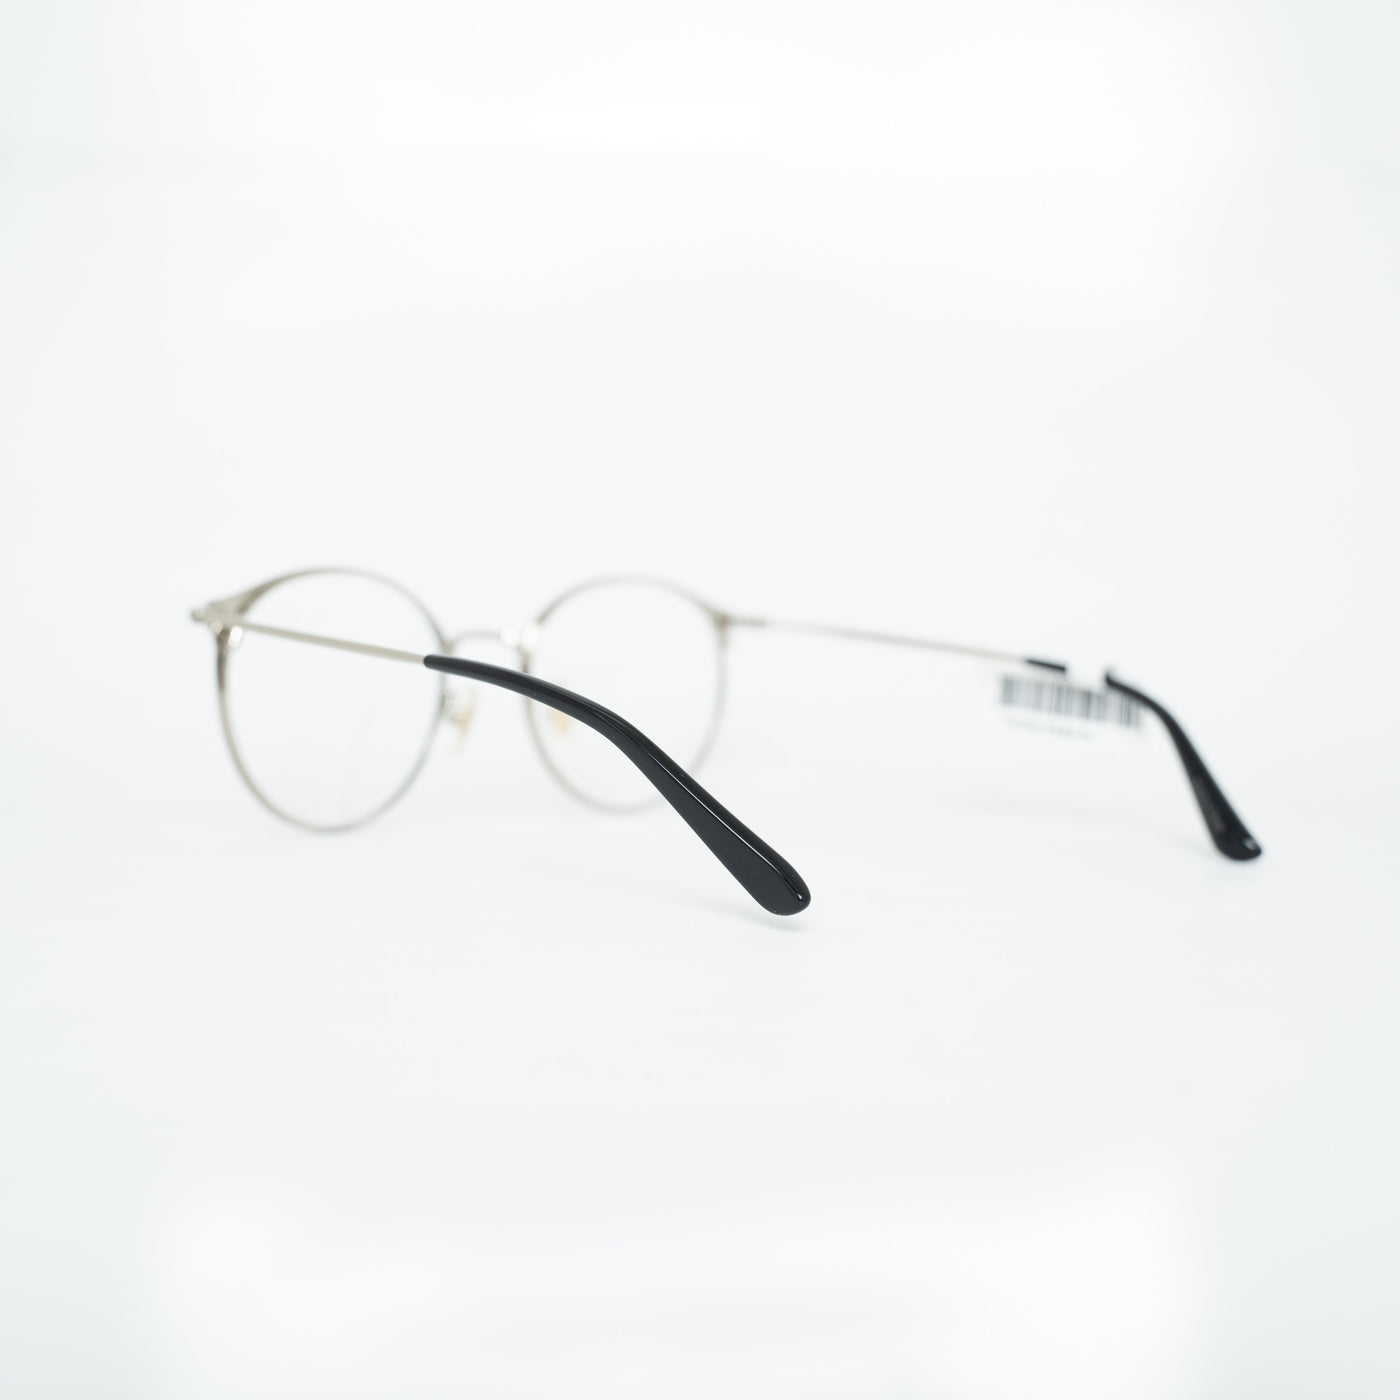 Mujosh Eyeglasses | MJHFM1730092C02_51 - Vision Express Optical Philippines